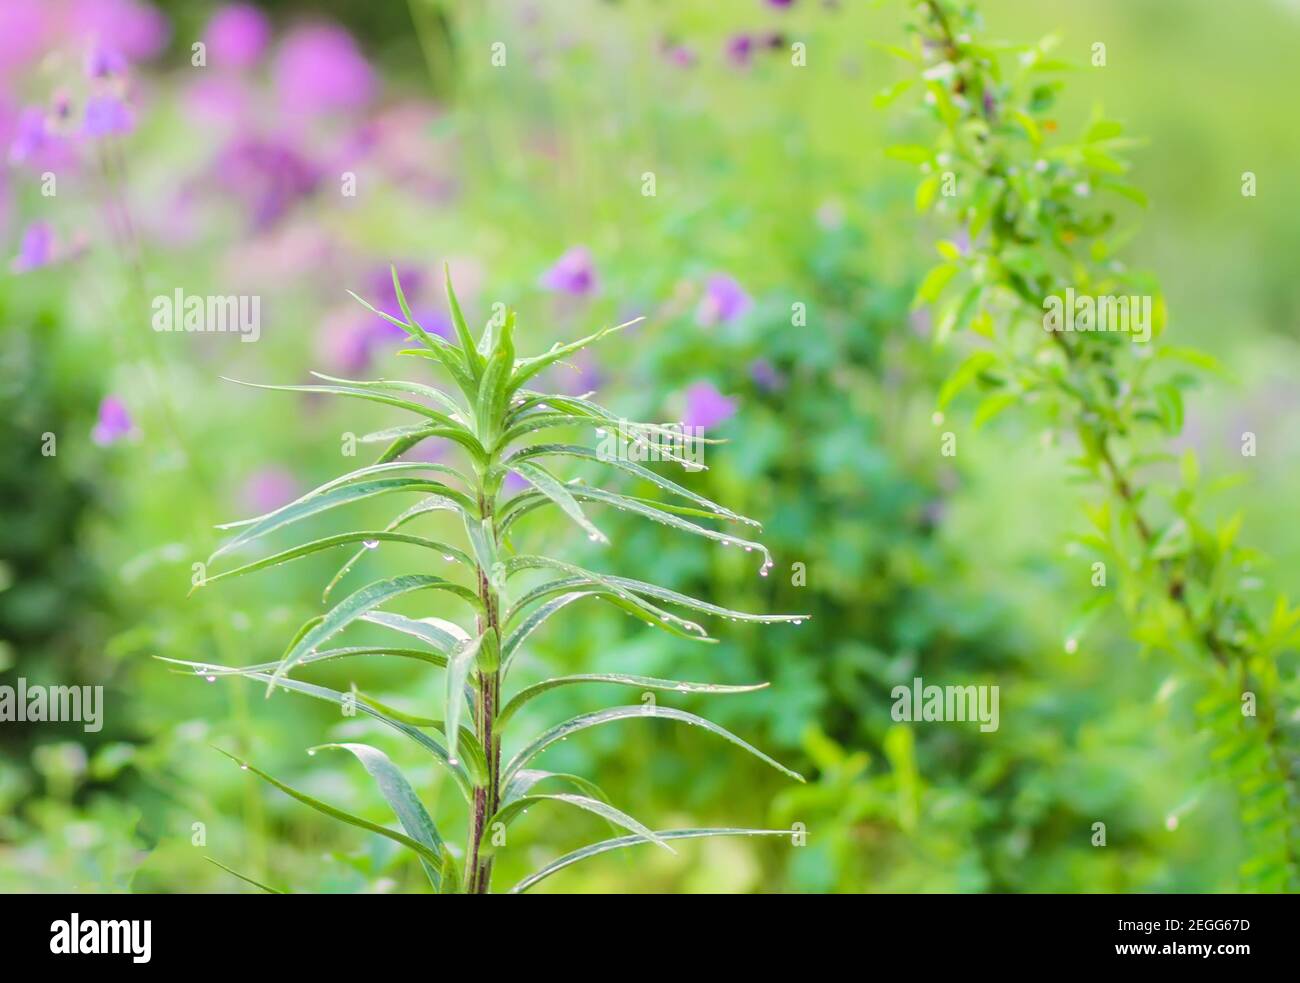 Green phlox plants in summer garden Stock Photo